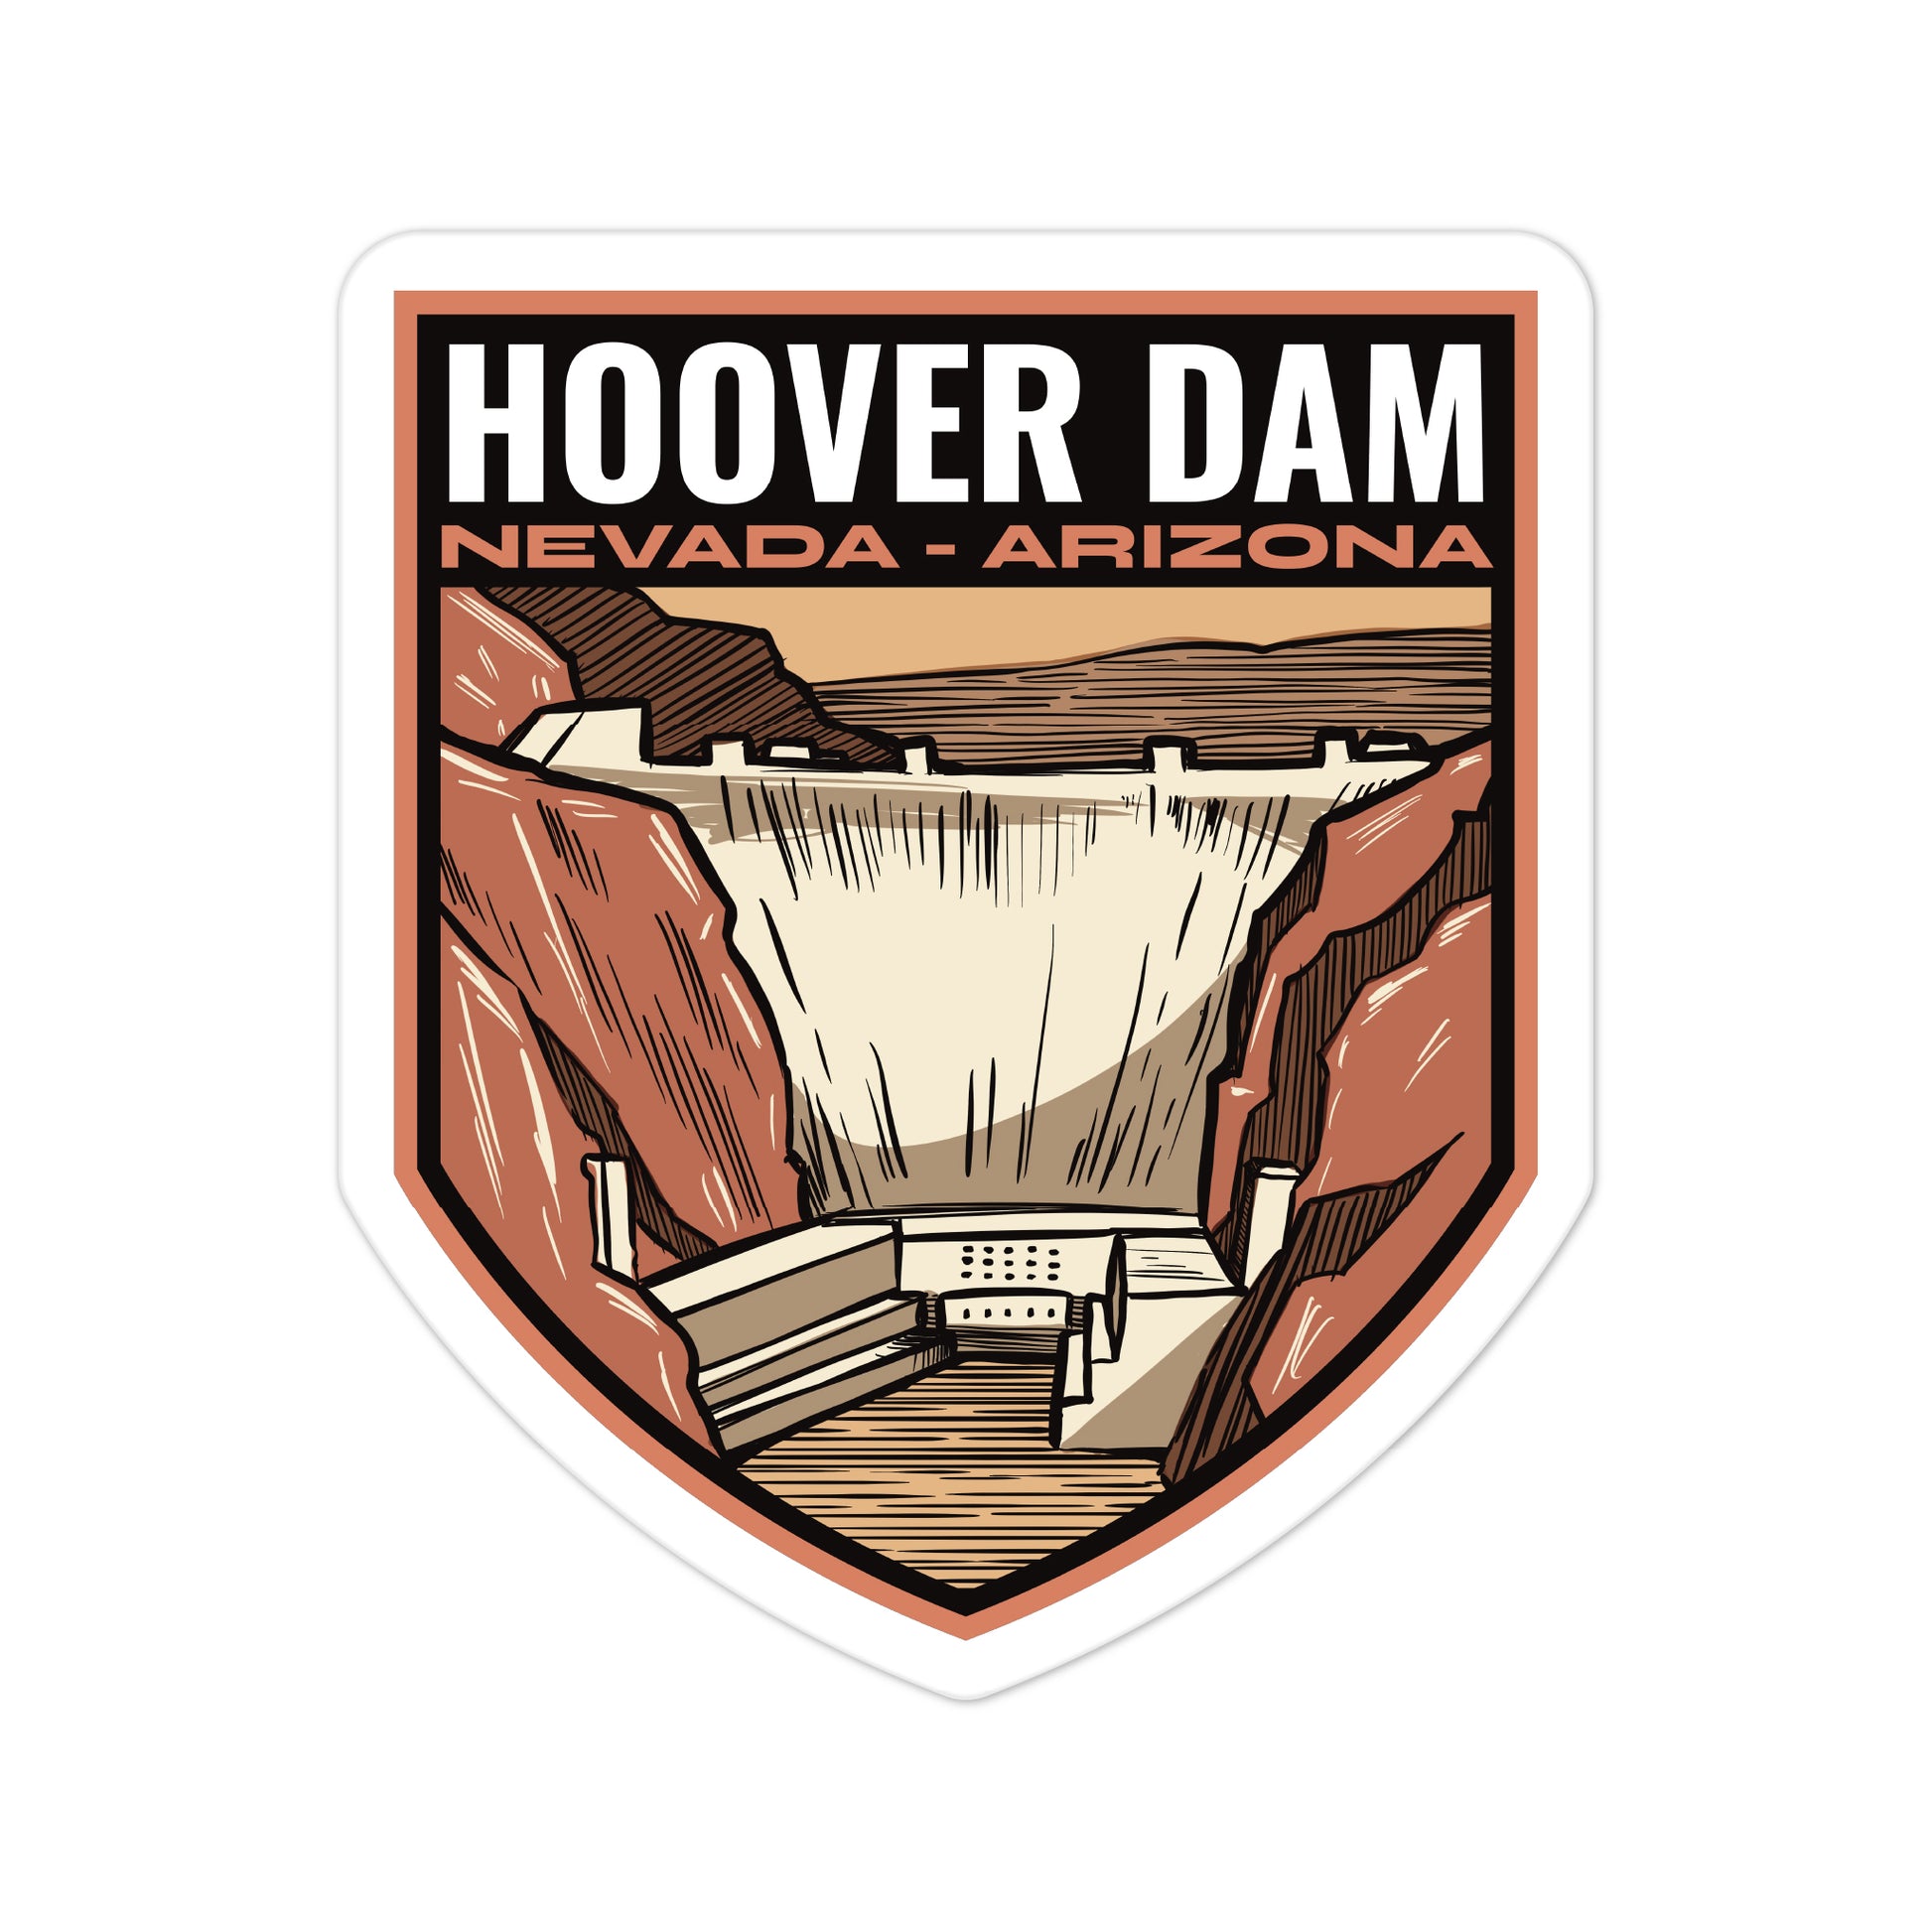 A sticker of Hoover Dam